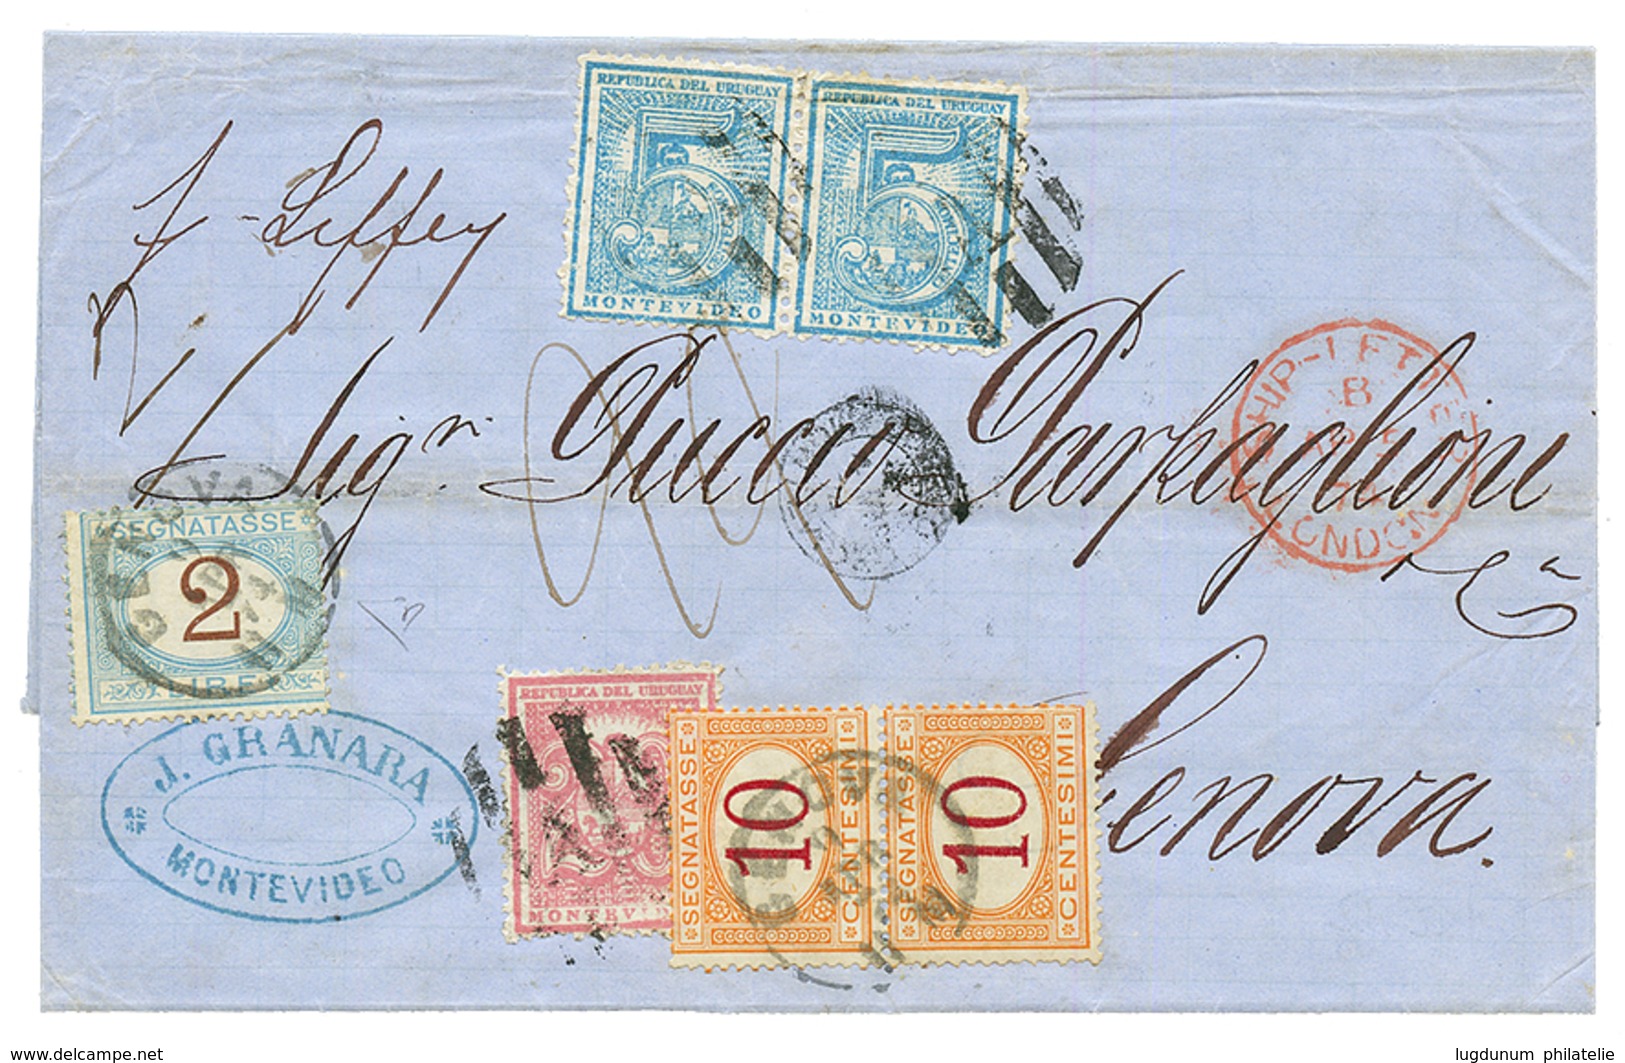 1874 URUGUAY Pair 5c + 20c + SHIP LETTER LONDON + "22" Tax Marking + ITALIAN POSTAGE DUES 10c(x2) + 2 LIRE Canc. GENOVA. - Uruguay